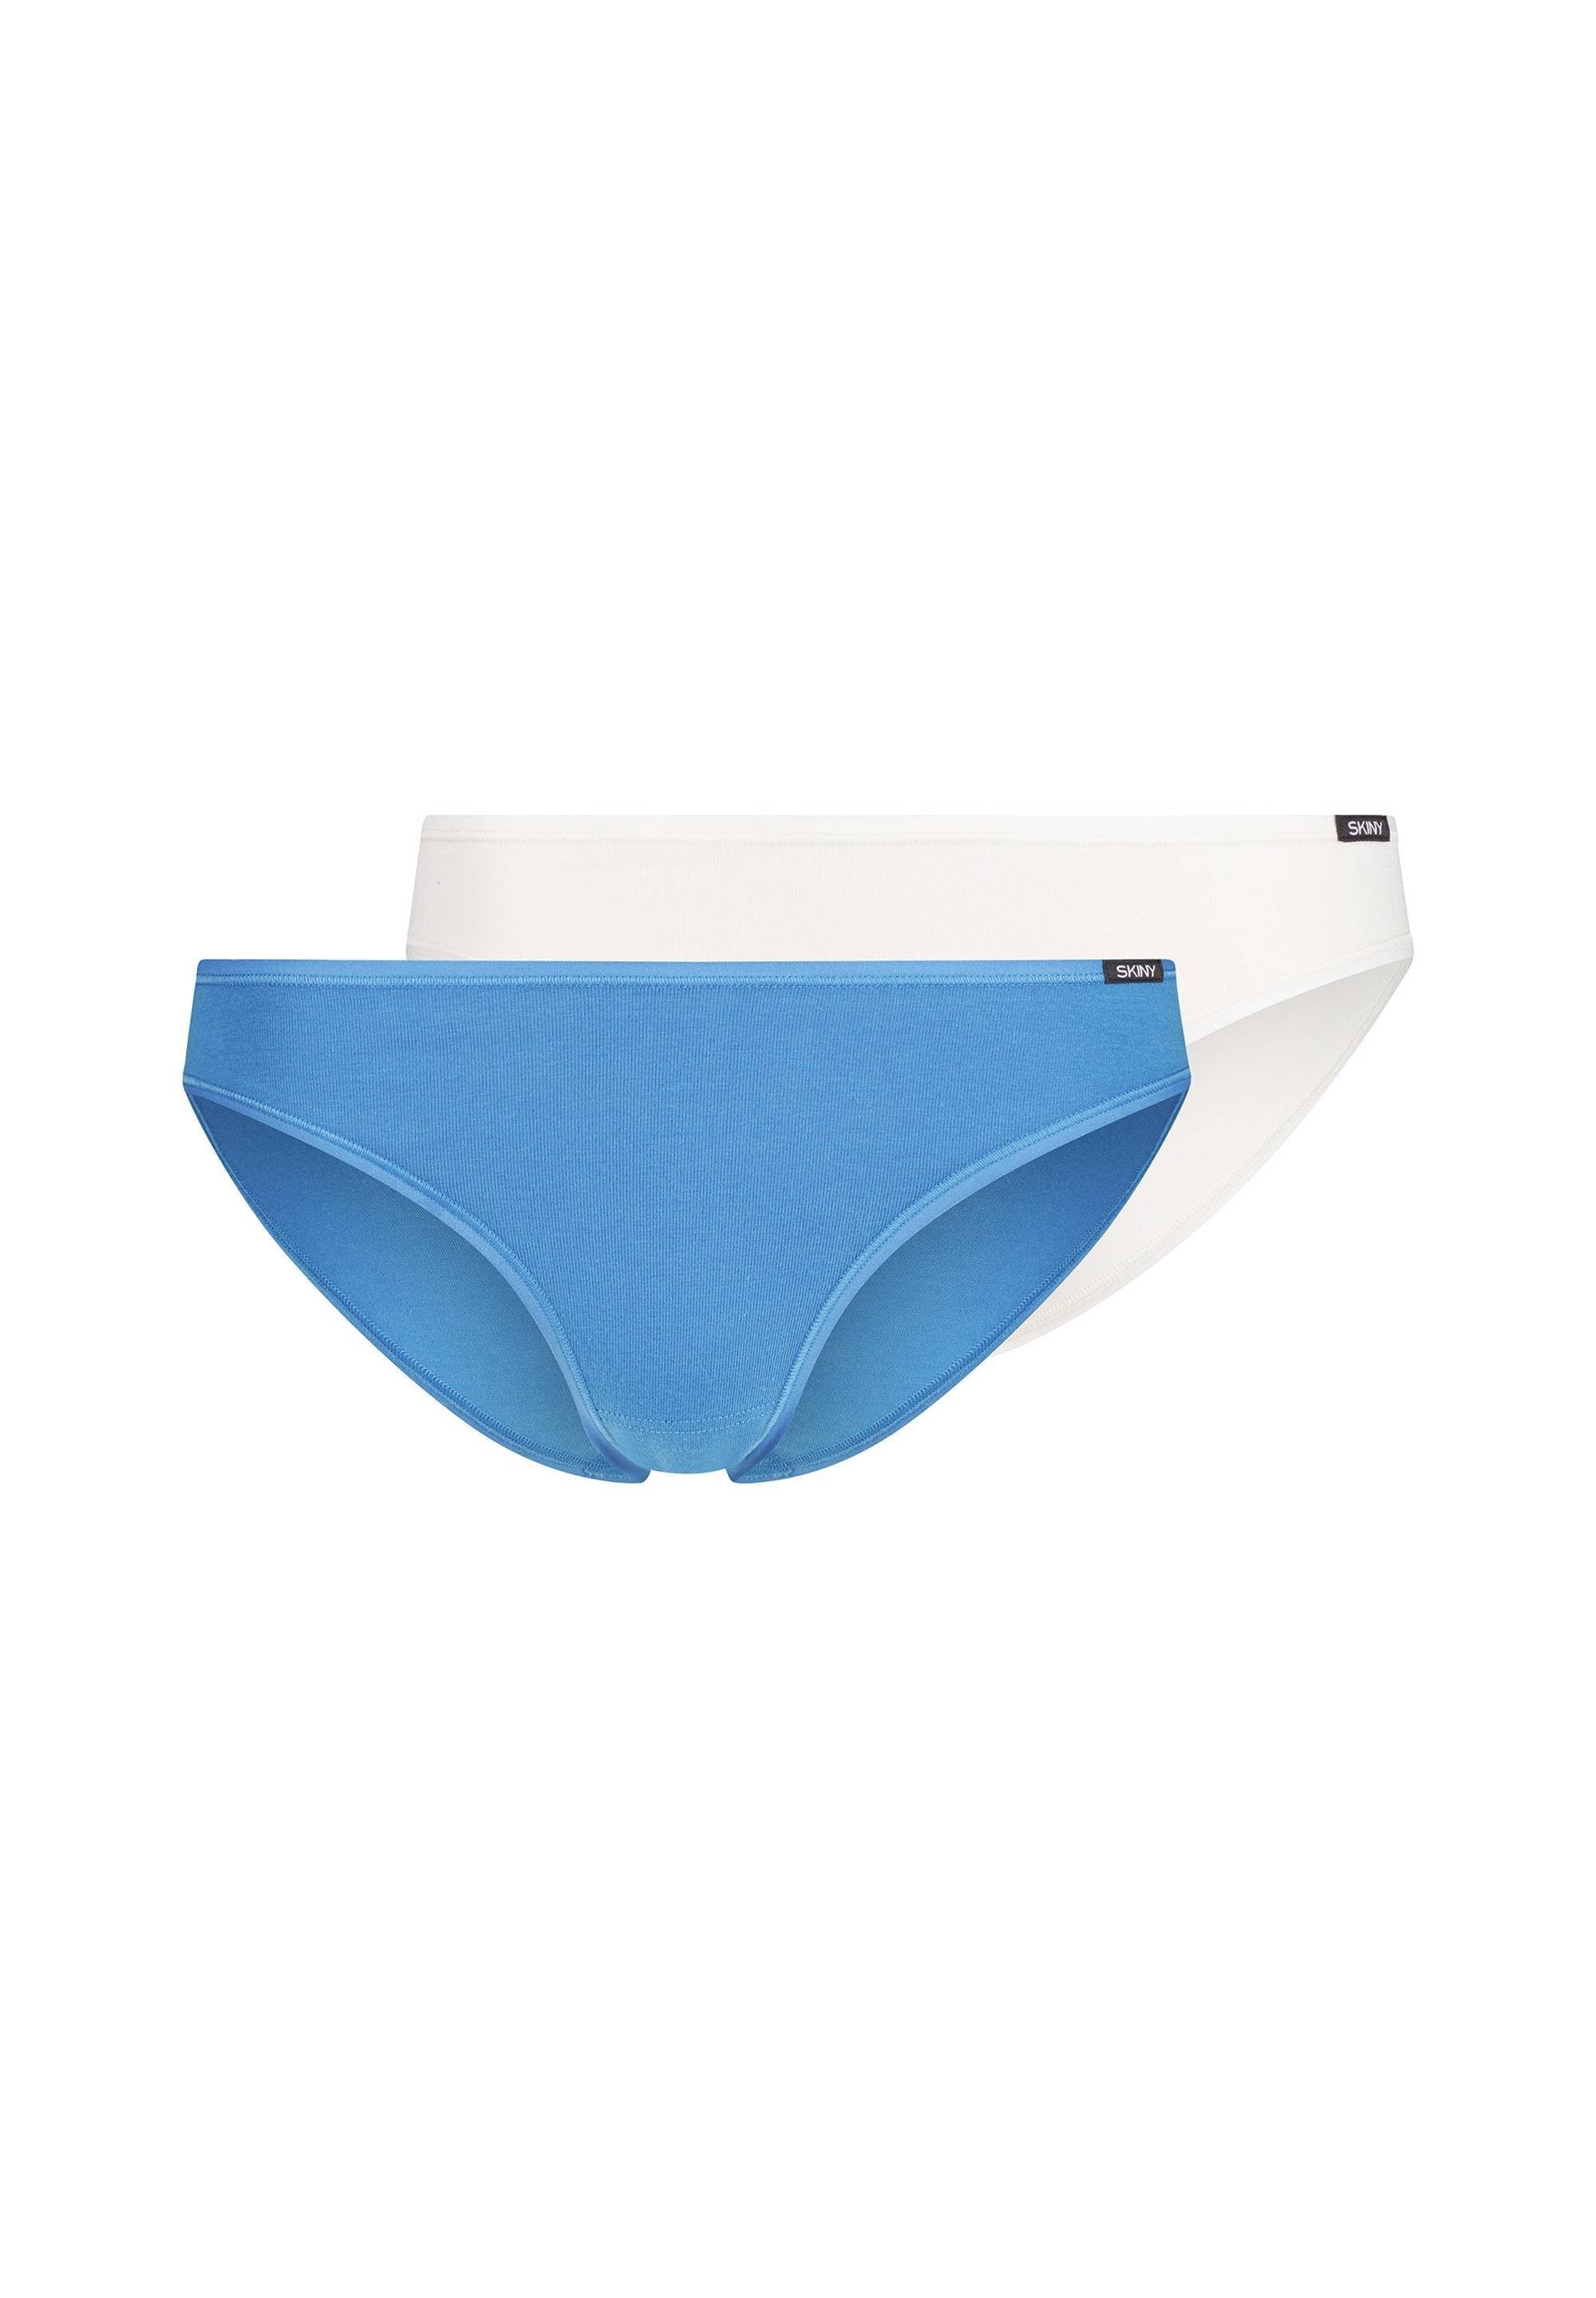 Hellblau/Weiß Rio Pack Bikini 2er Slip Slip, Skiny Slip, - Cotton Damen